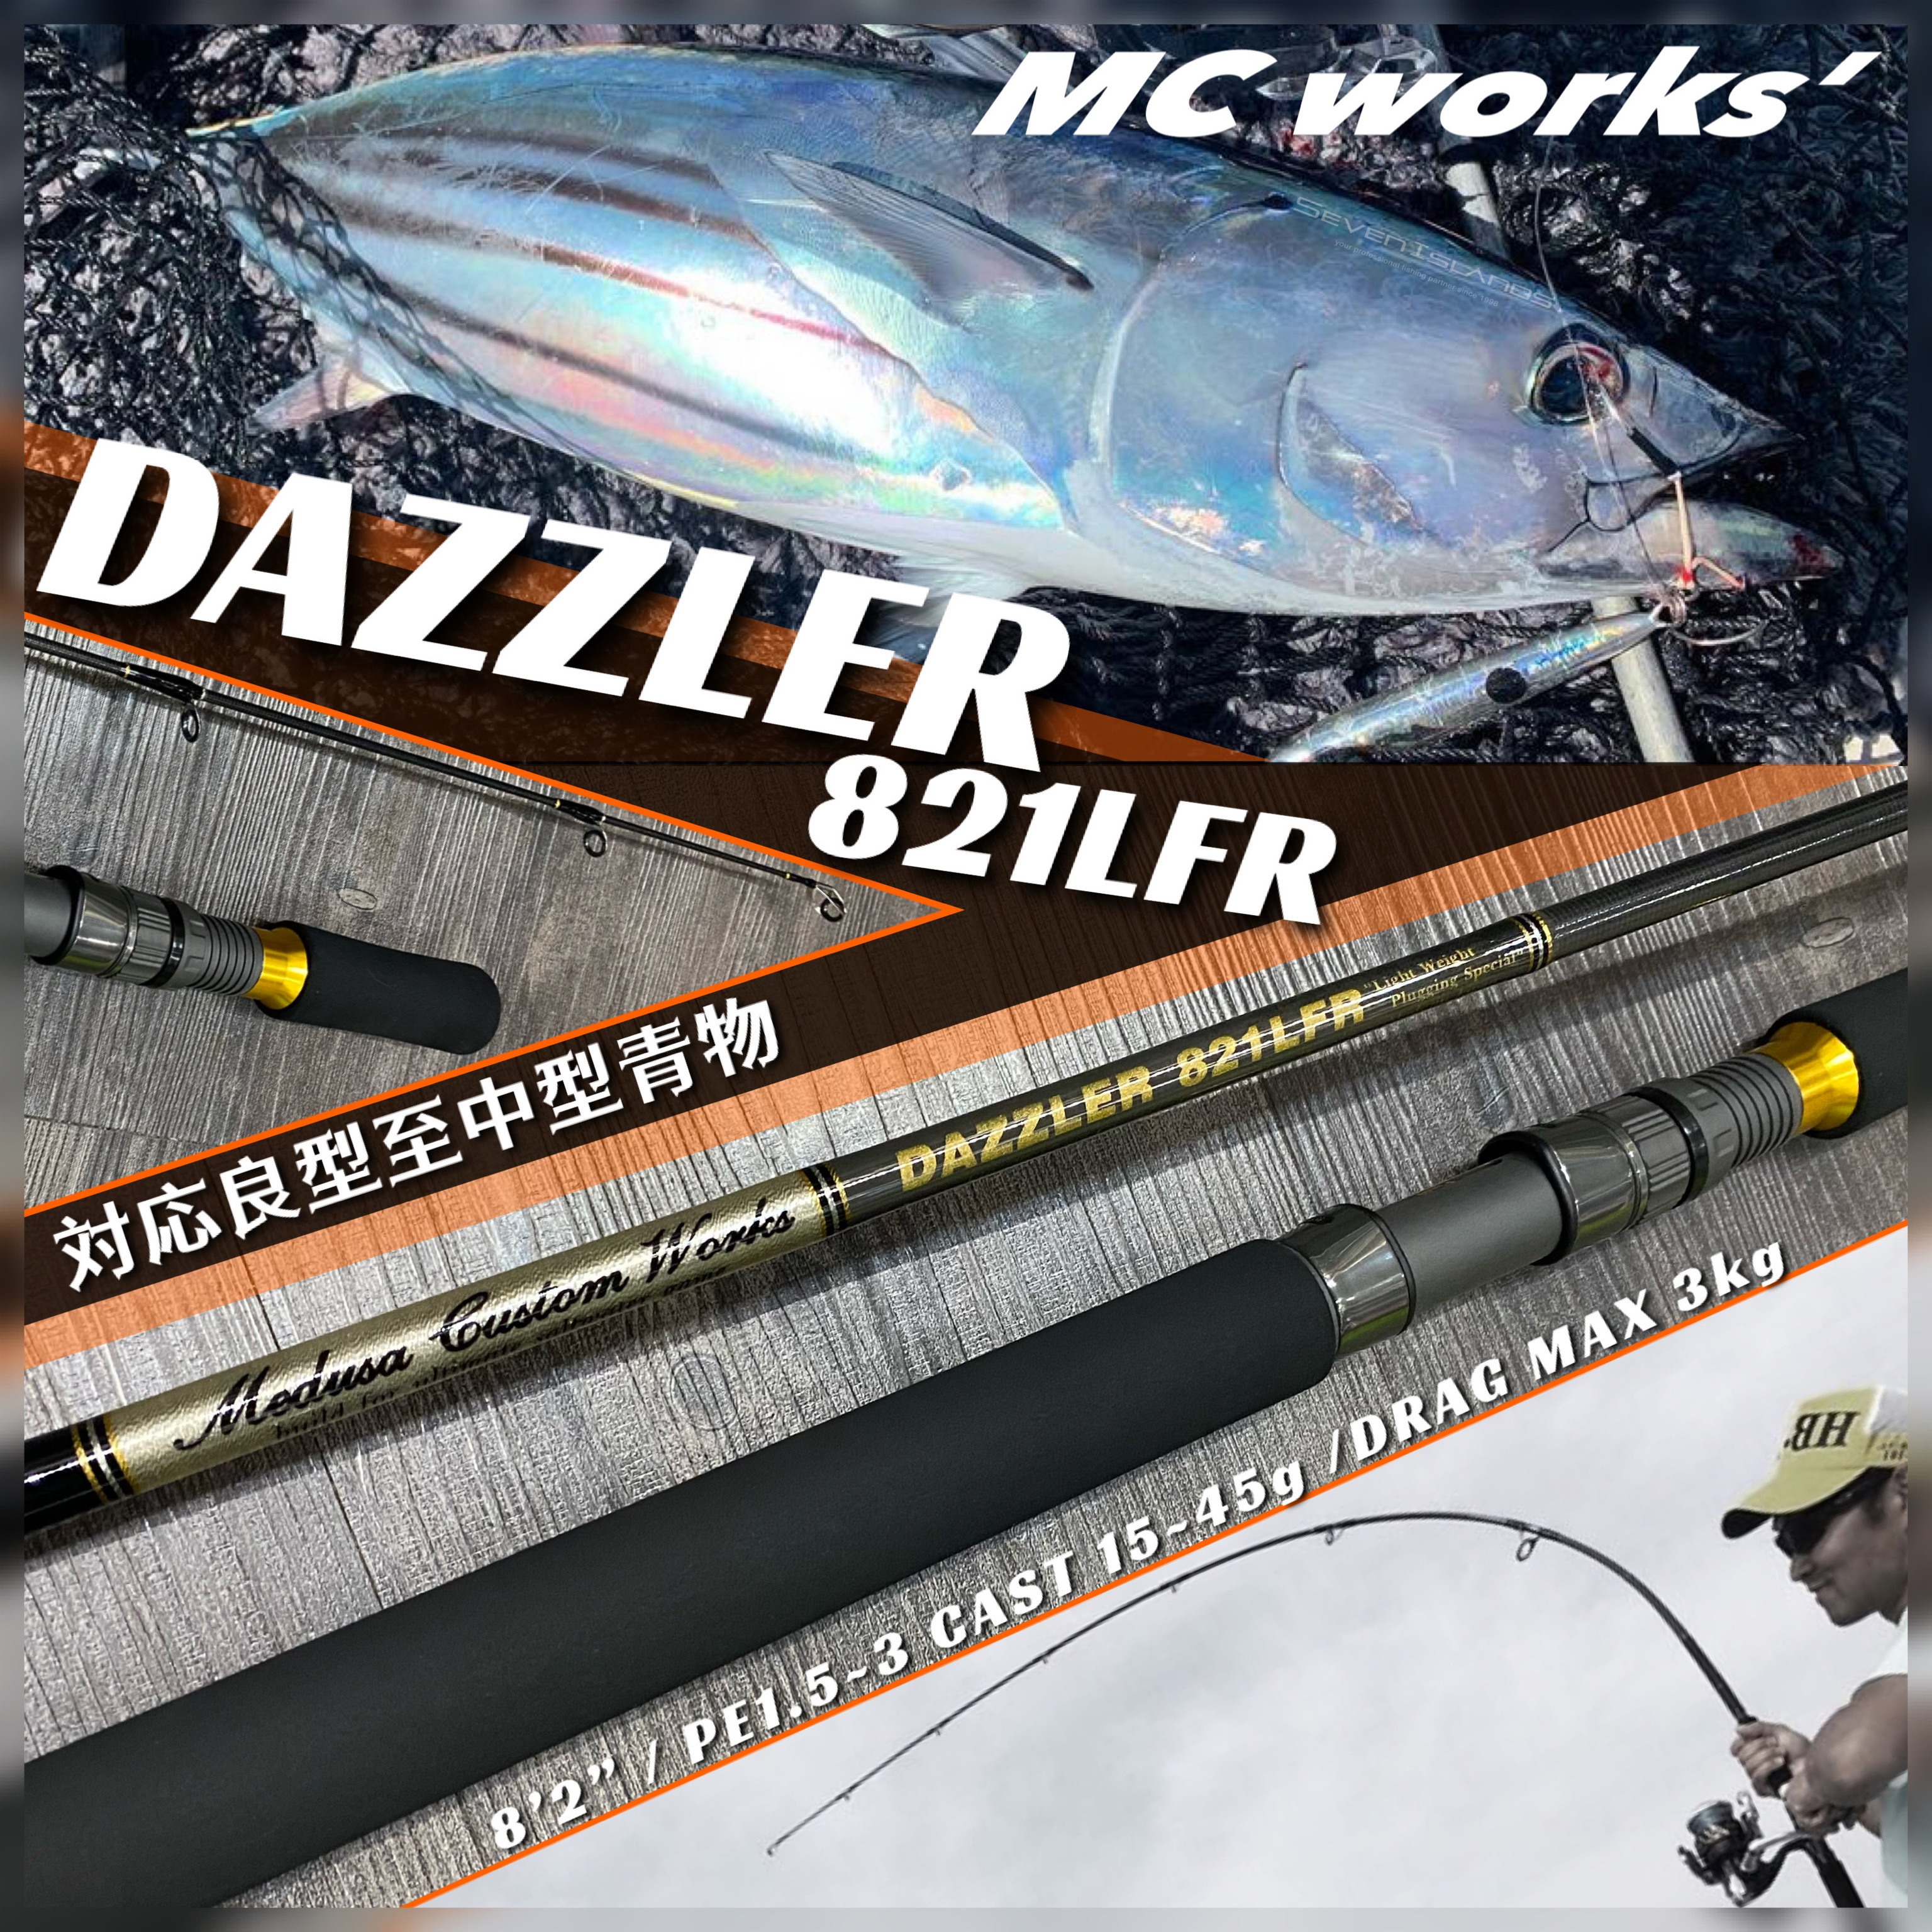 MC WORKS' DAZZLER 821LFR CASTING ROD